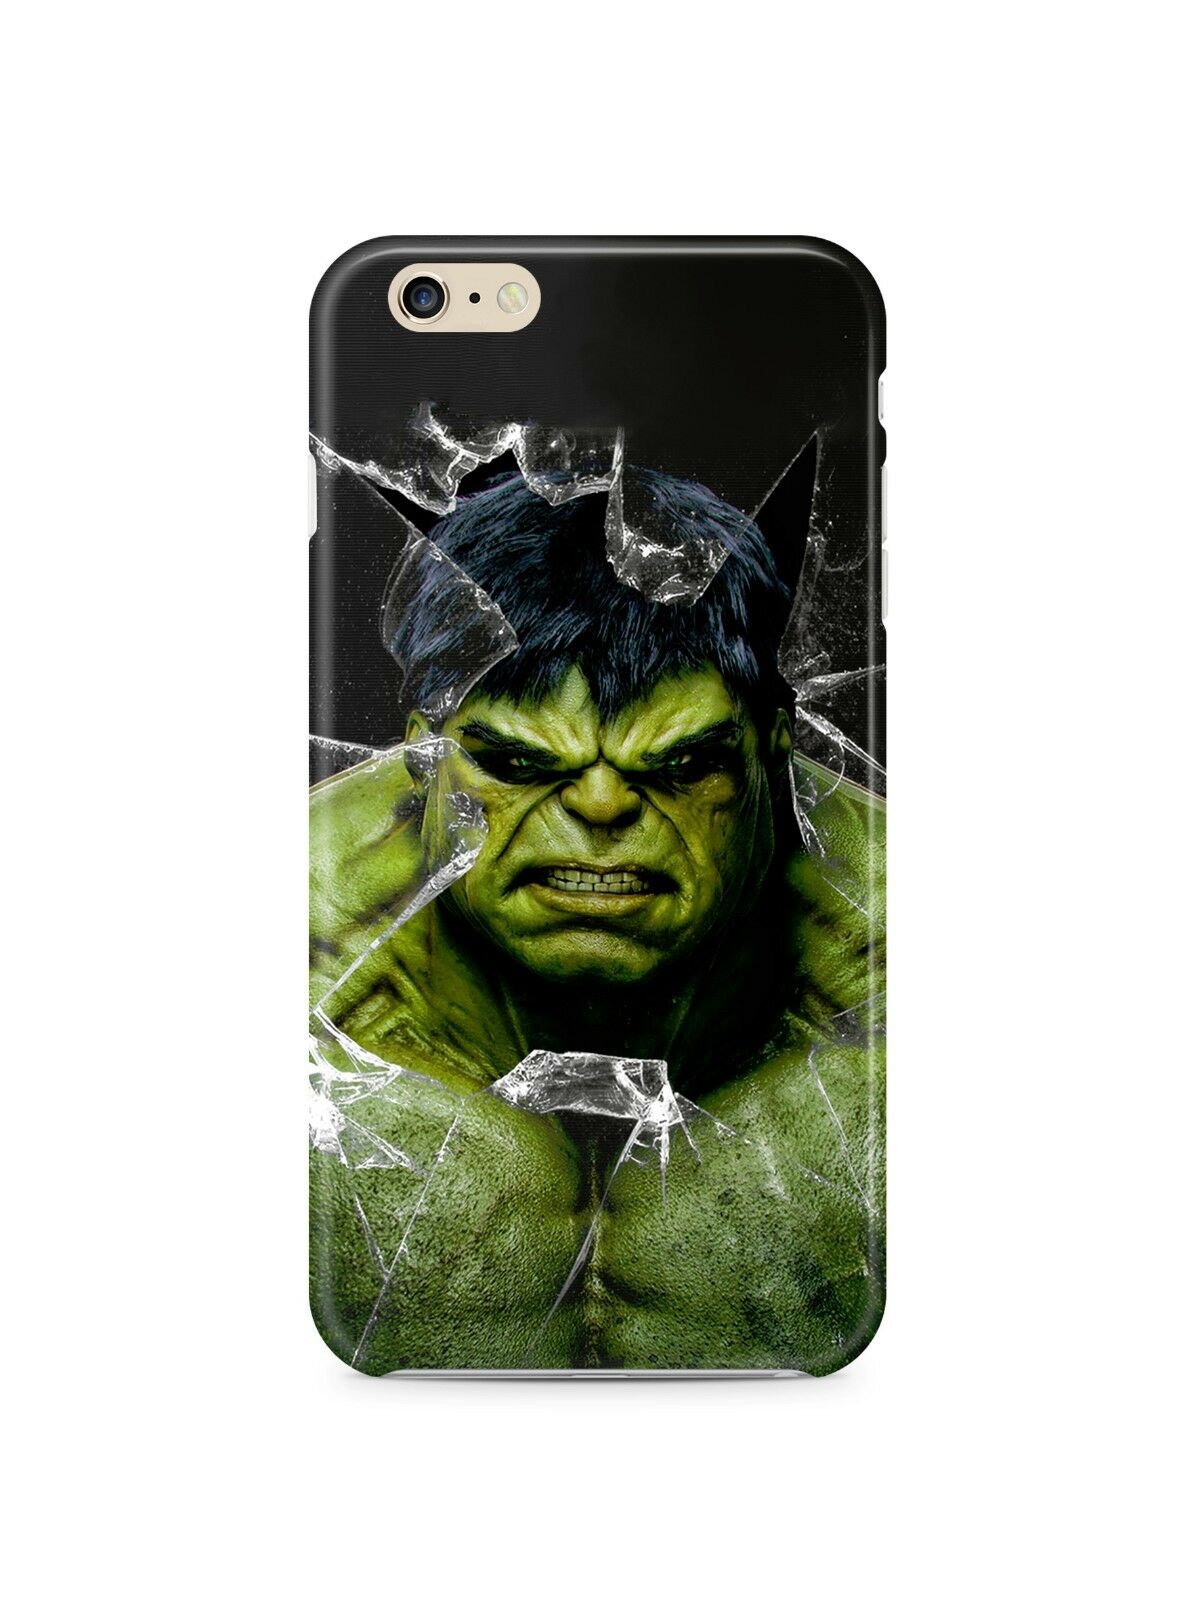 Incredible Hulk Superhero Marvel Iphone 4s 5s 6 7 8 X XS Max XR 11 Pro Plus Case caselegendcaselegend For iPhone 7 